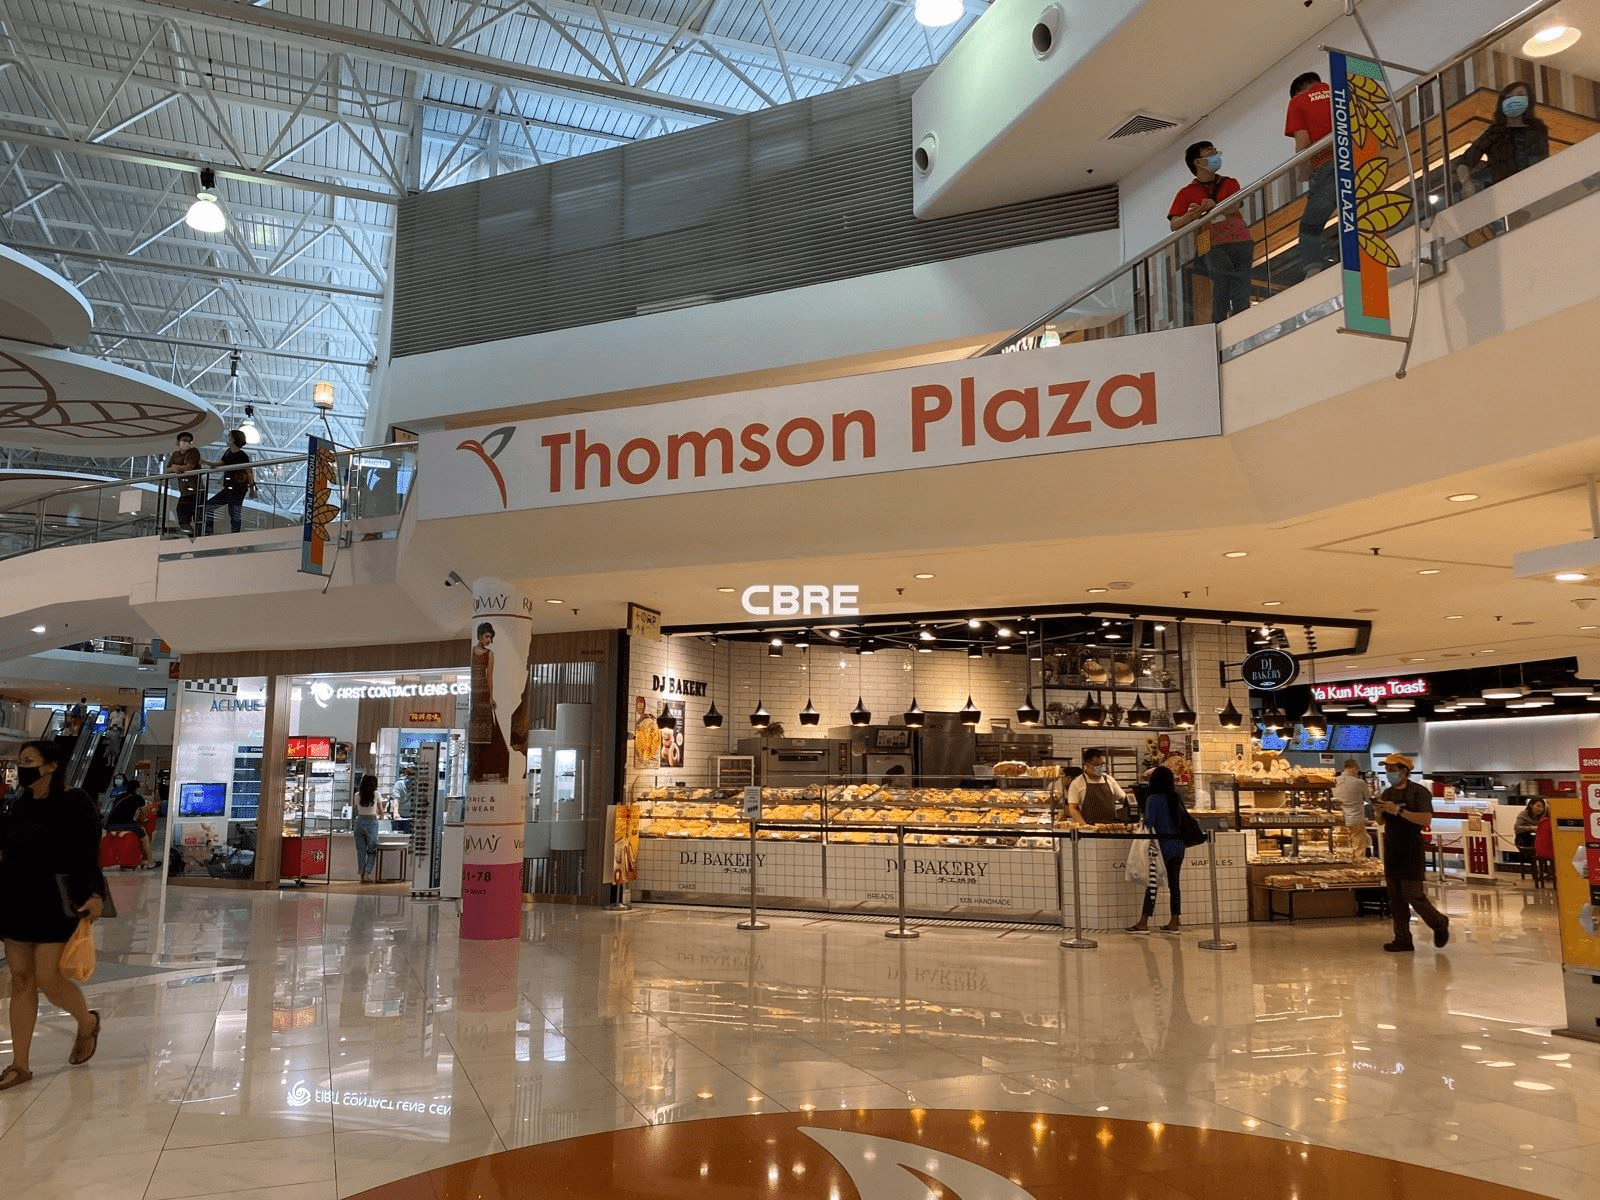 Thomson Plaza Today